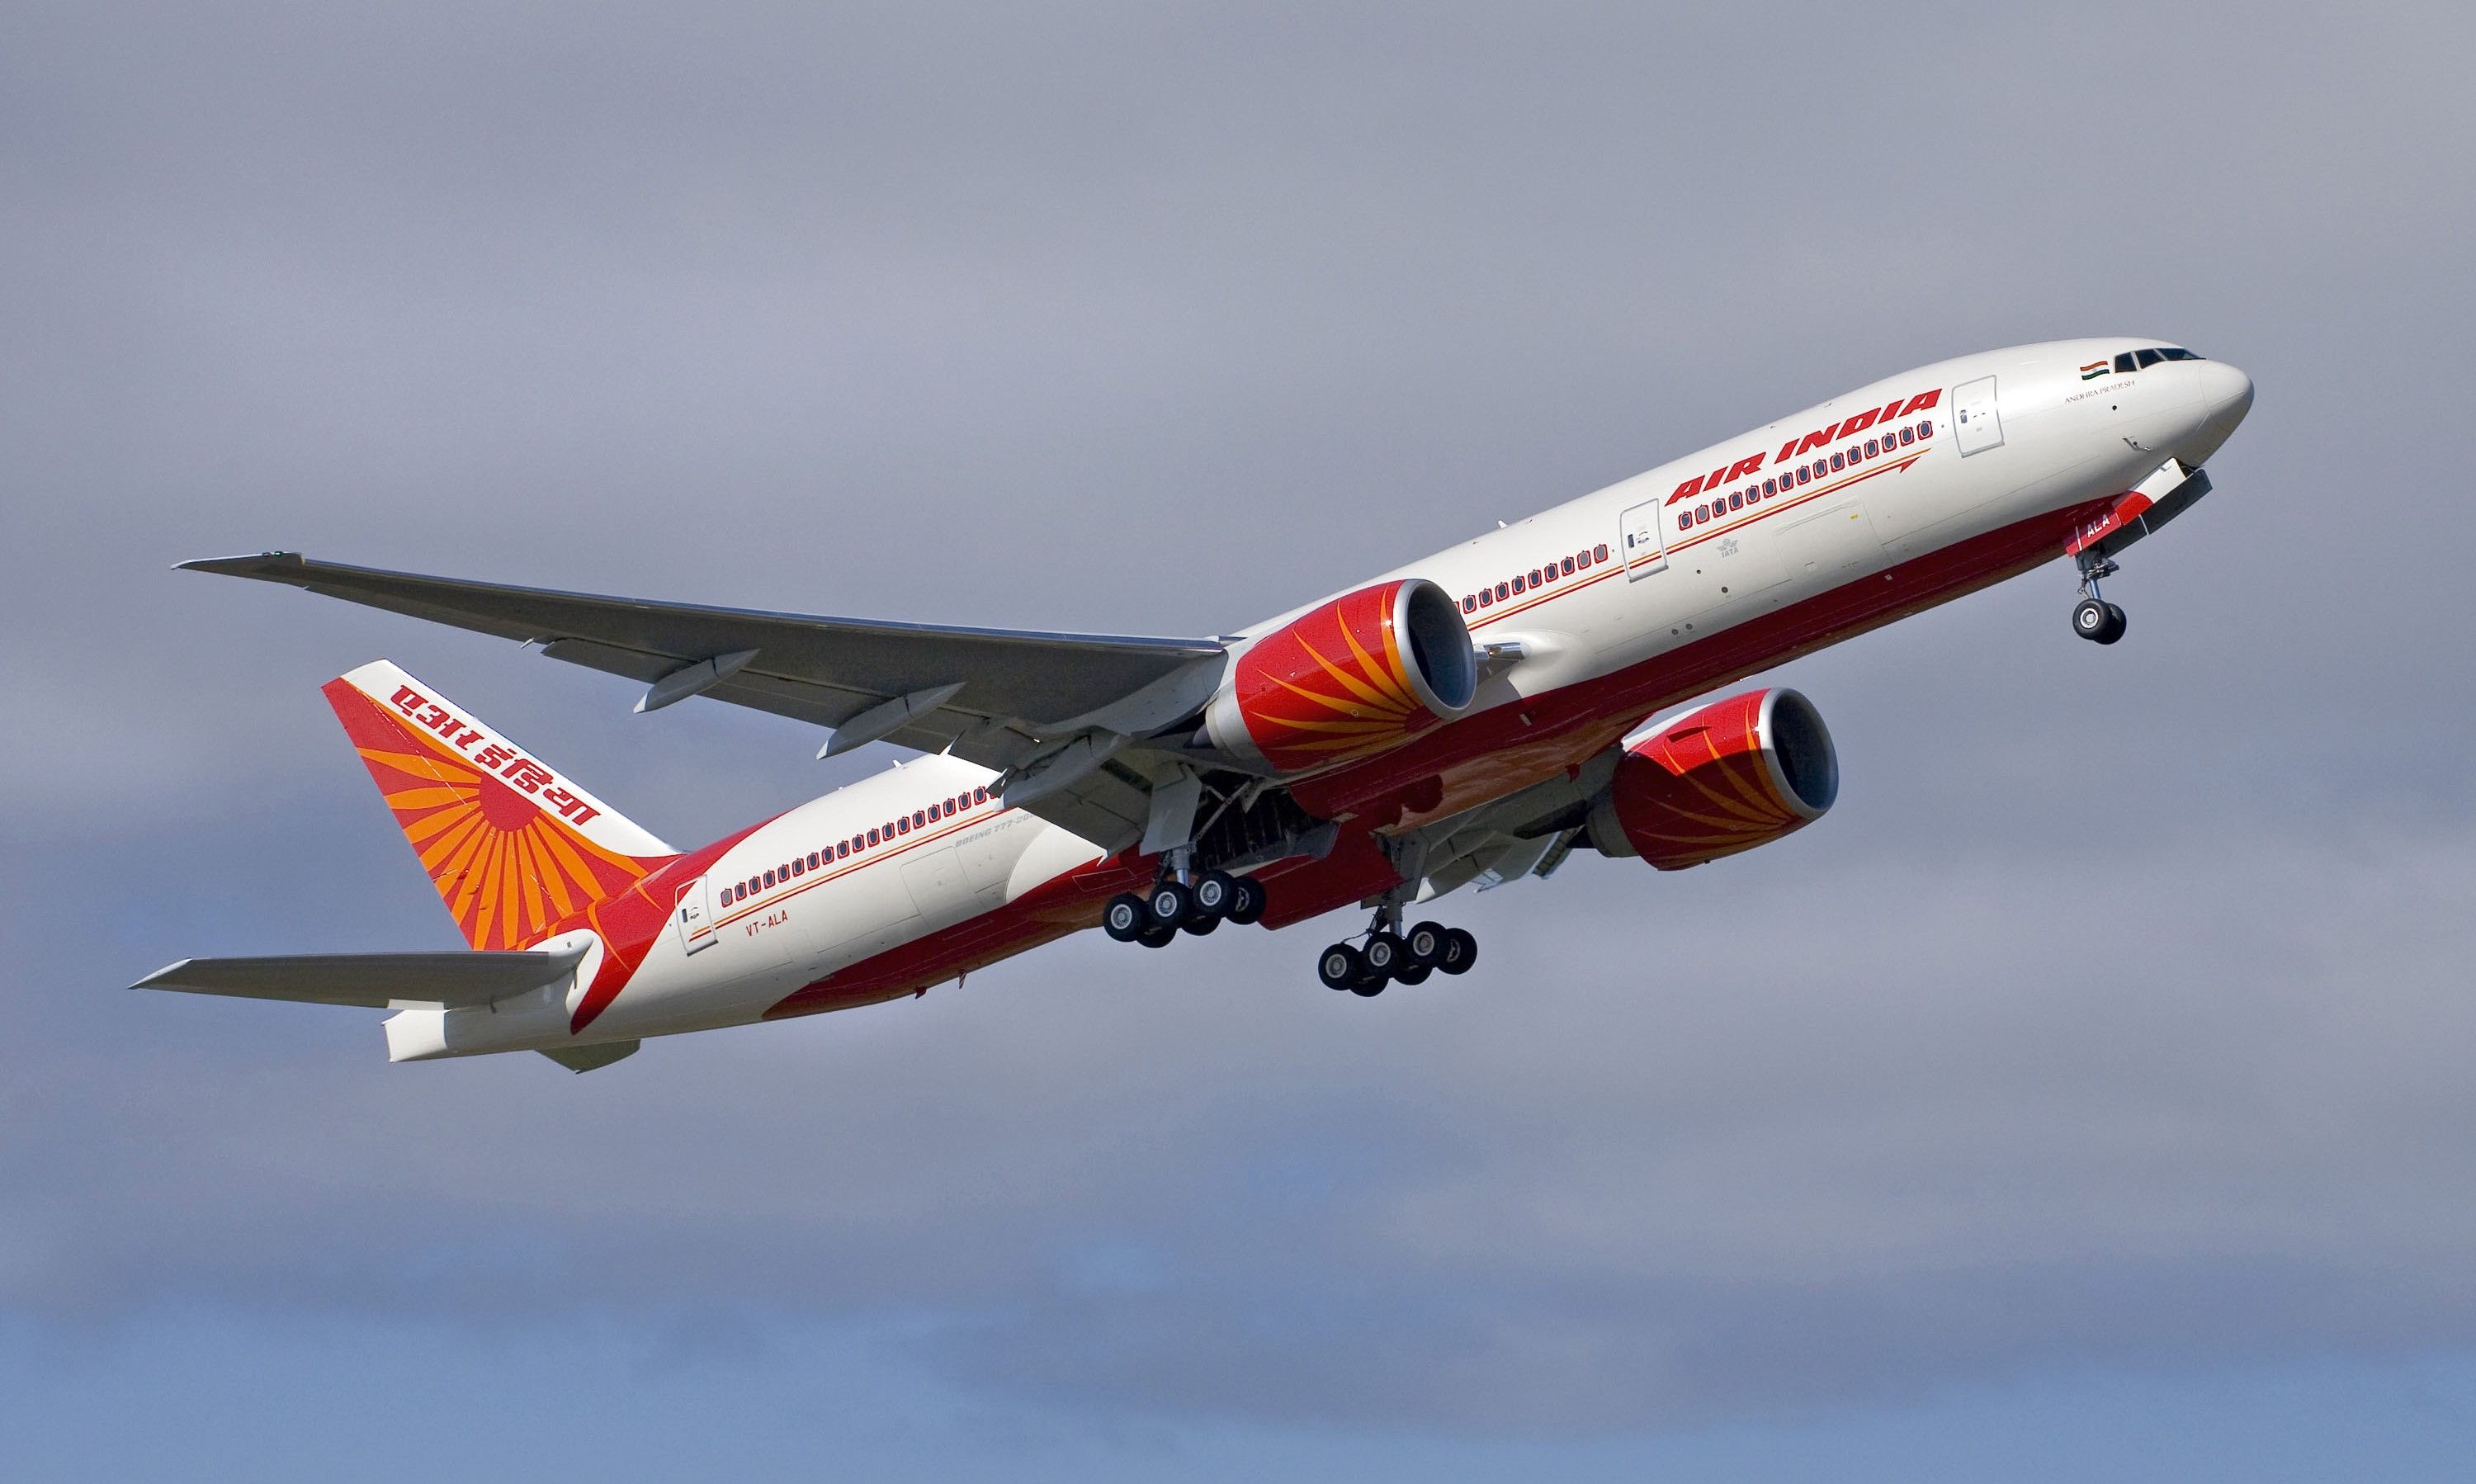 Air India B777-200LR